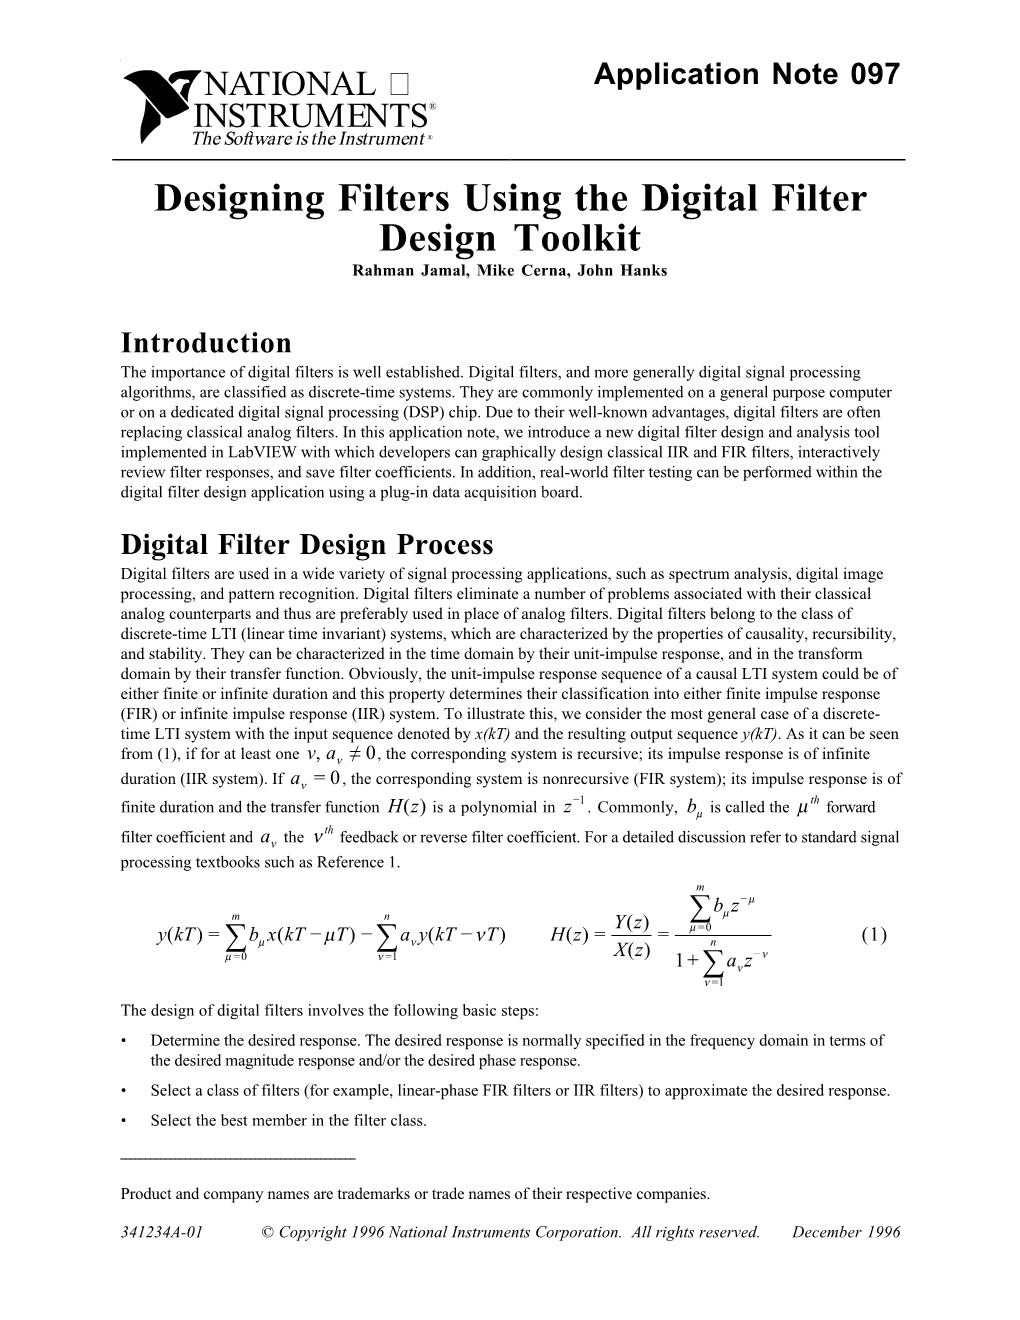 Designing Filters Using the Digital Filter Design Toolkit Rahman Jamal, Mike Cerna, John Hanks